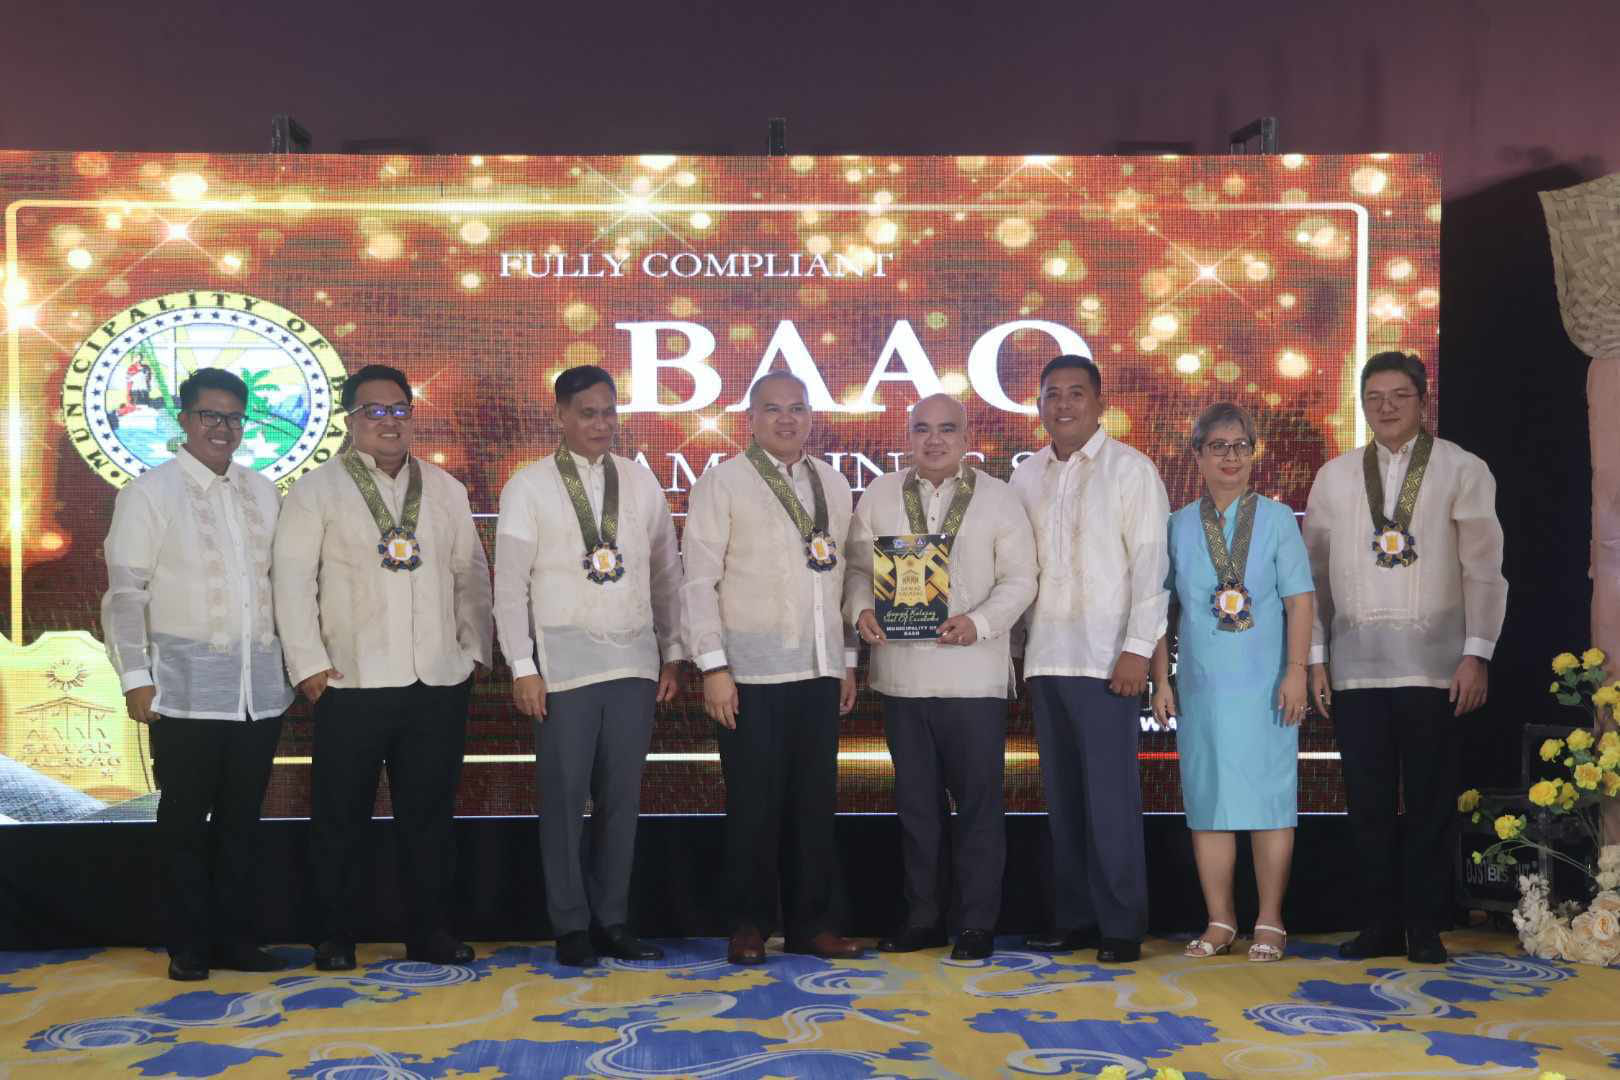 Bicol Region Featured Story